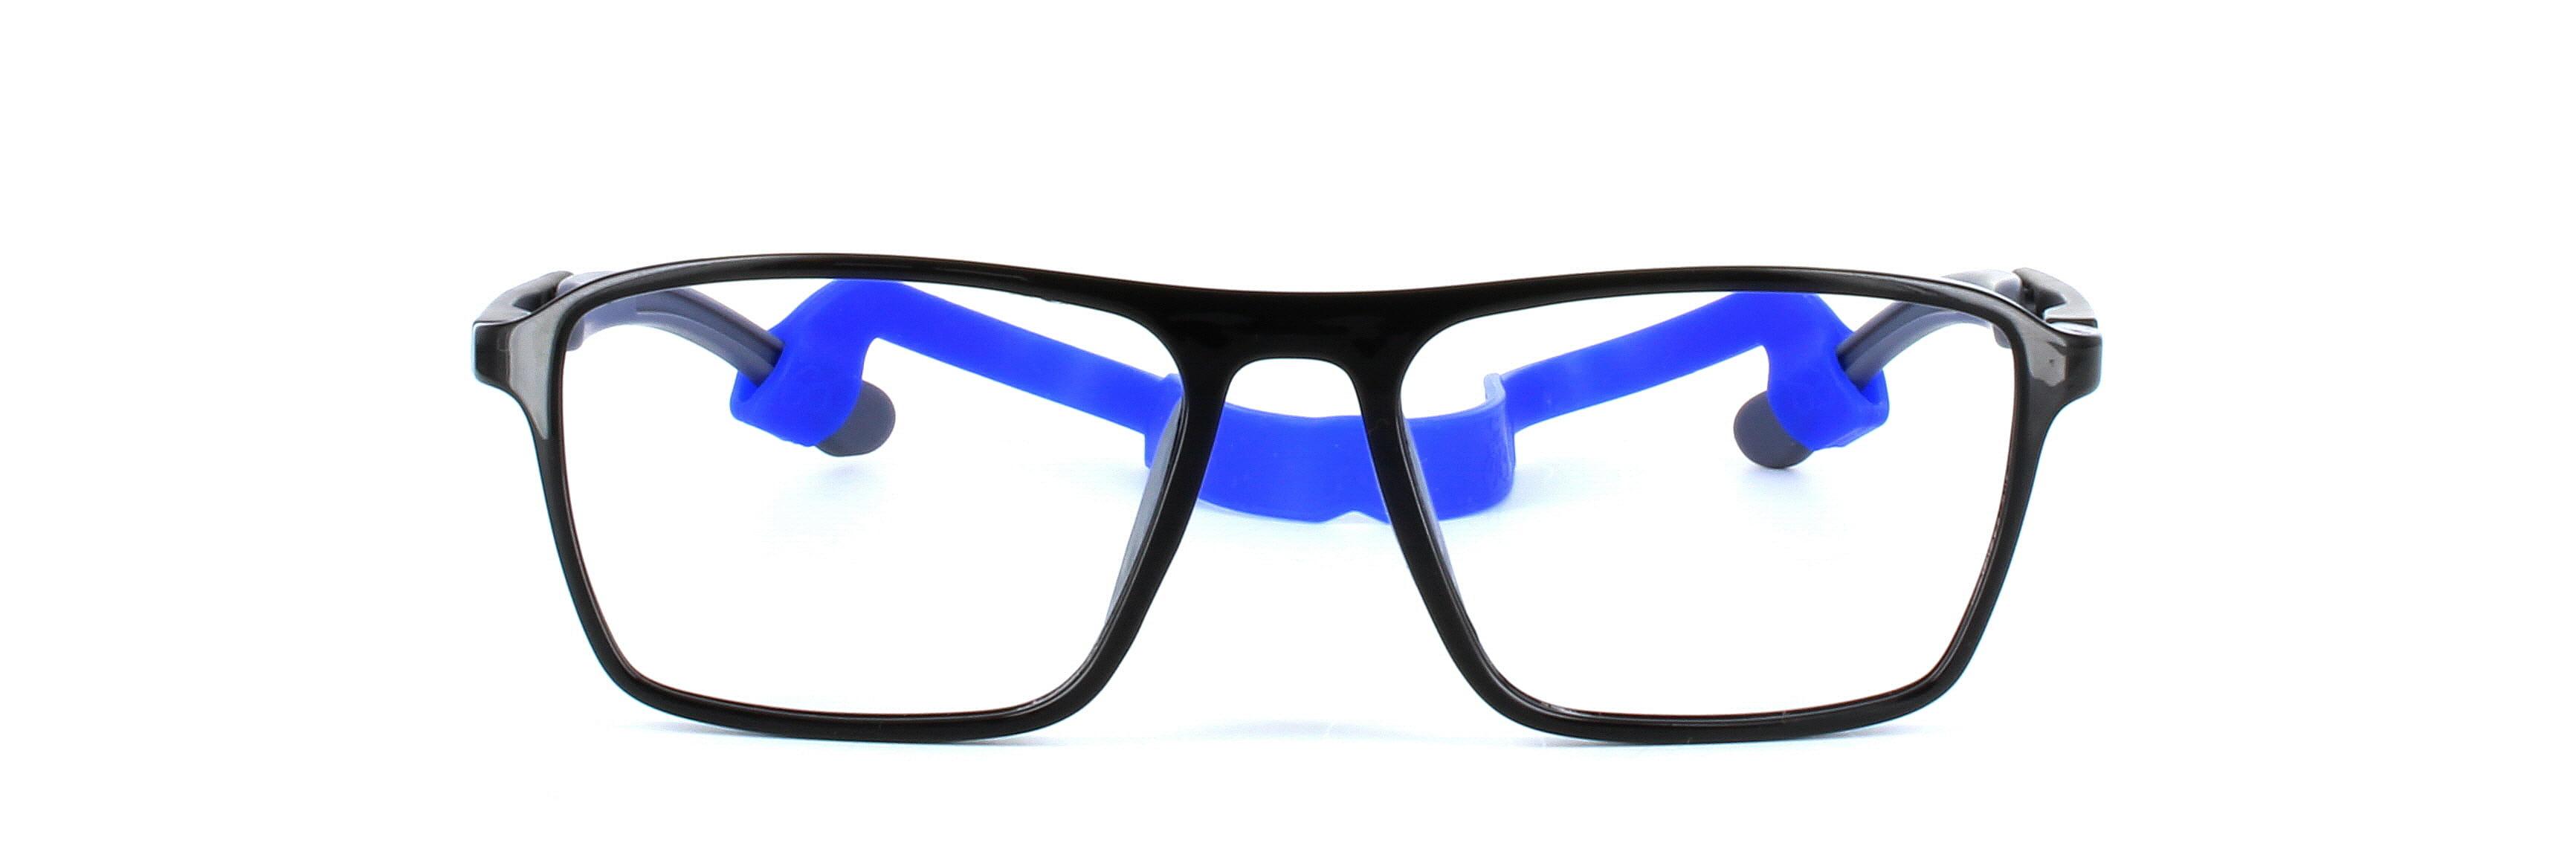 Ramble - unisex prescription sports glasses - black & grey - image view 5